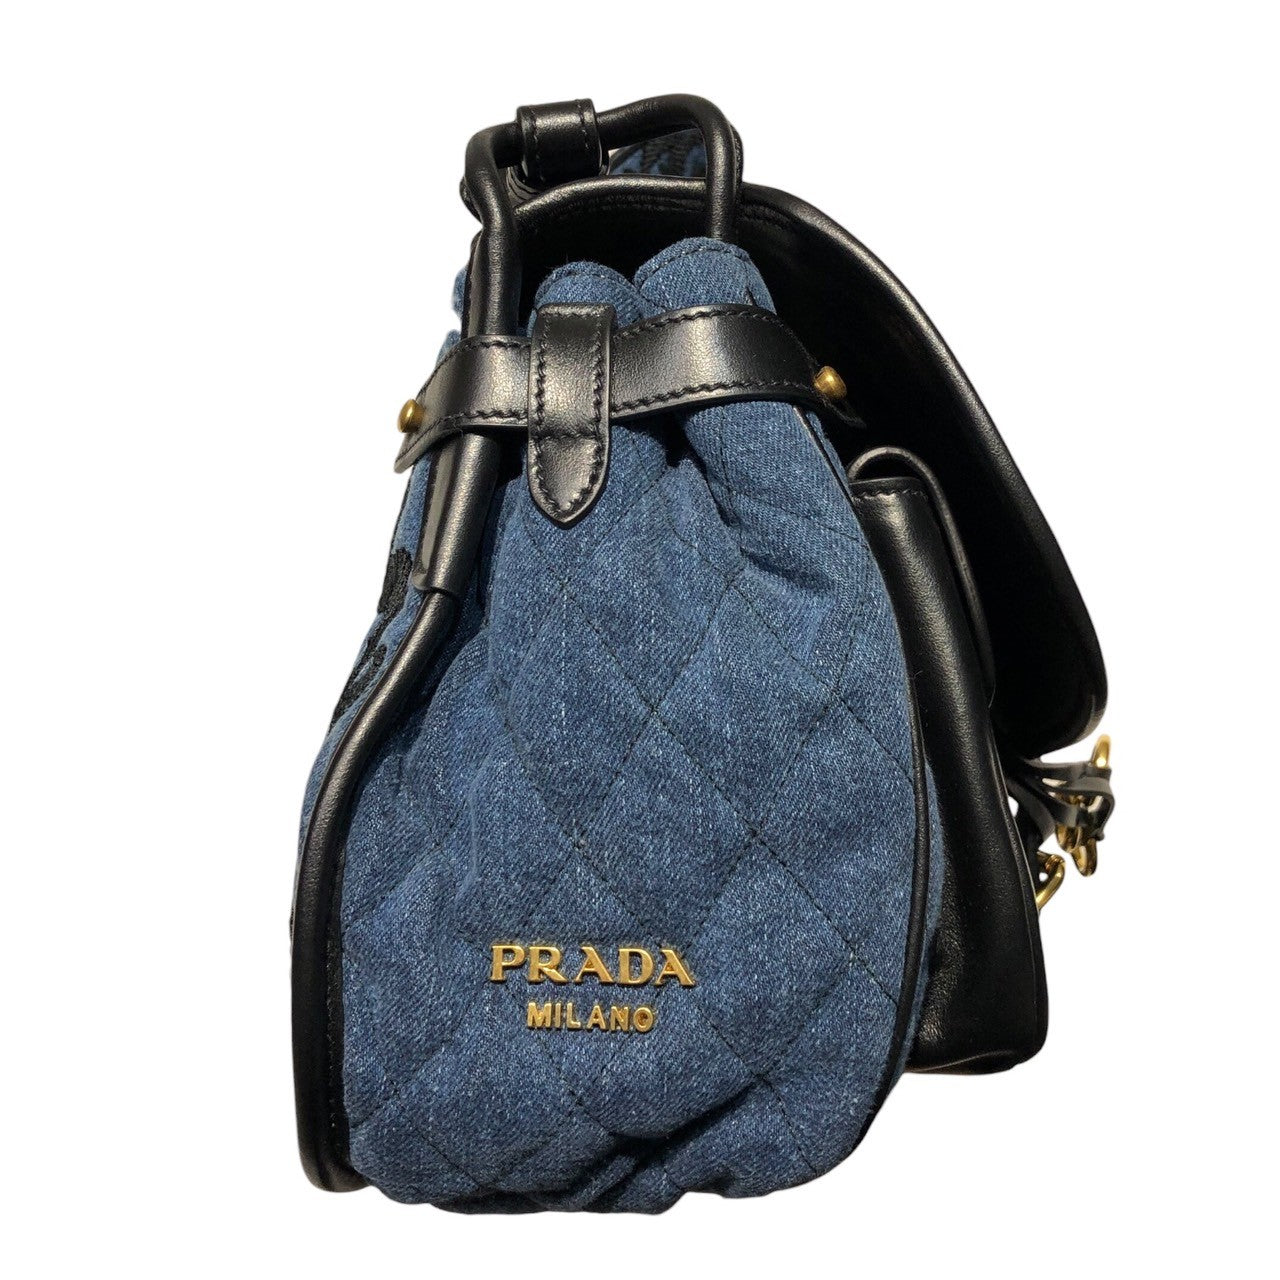 PRADA(プラダ) DENIM IMPUNTURA Shoulder bag デニム インプンチュラ ショルダー バッグ 1BD050 インディゴ×ブラック ギャランティカード付属